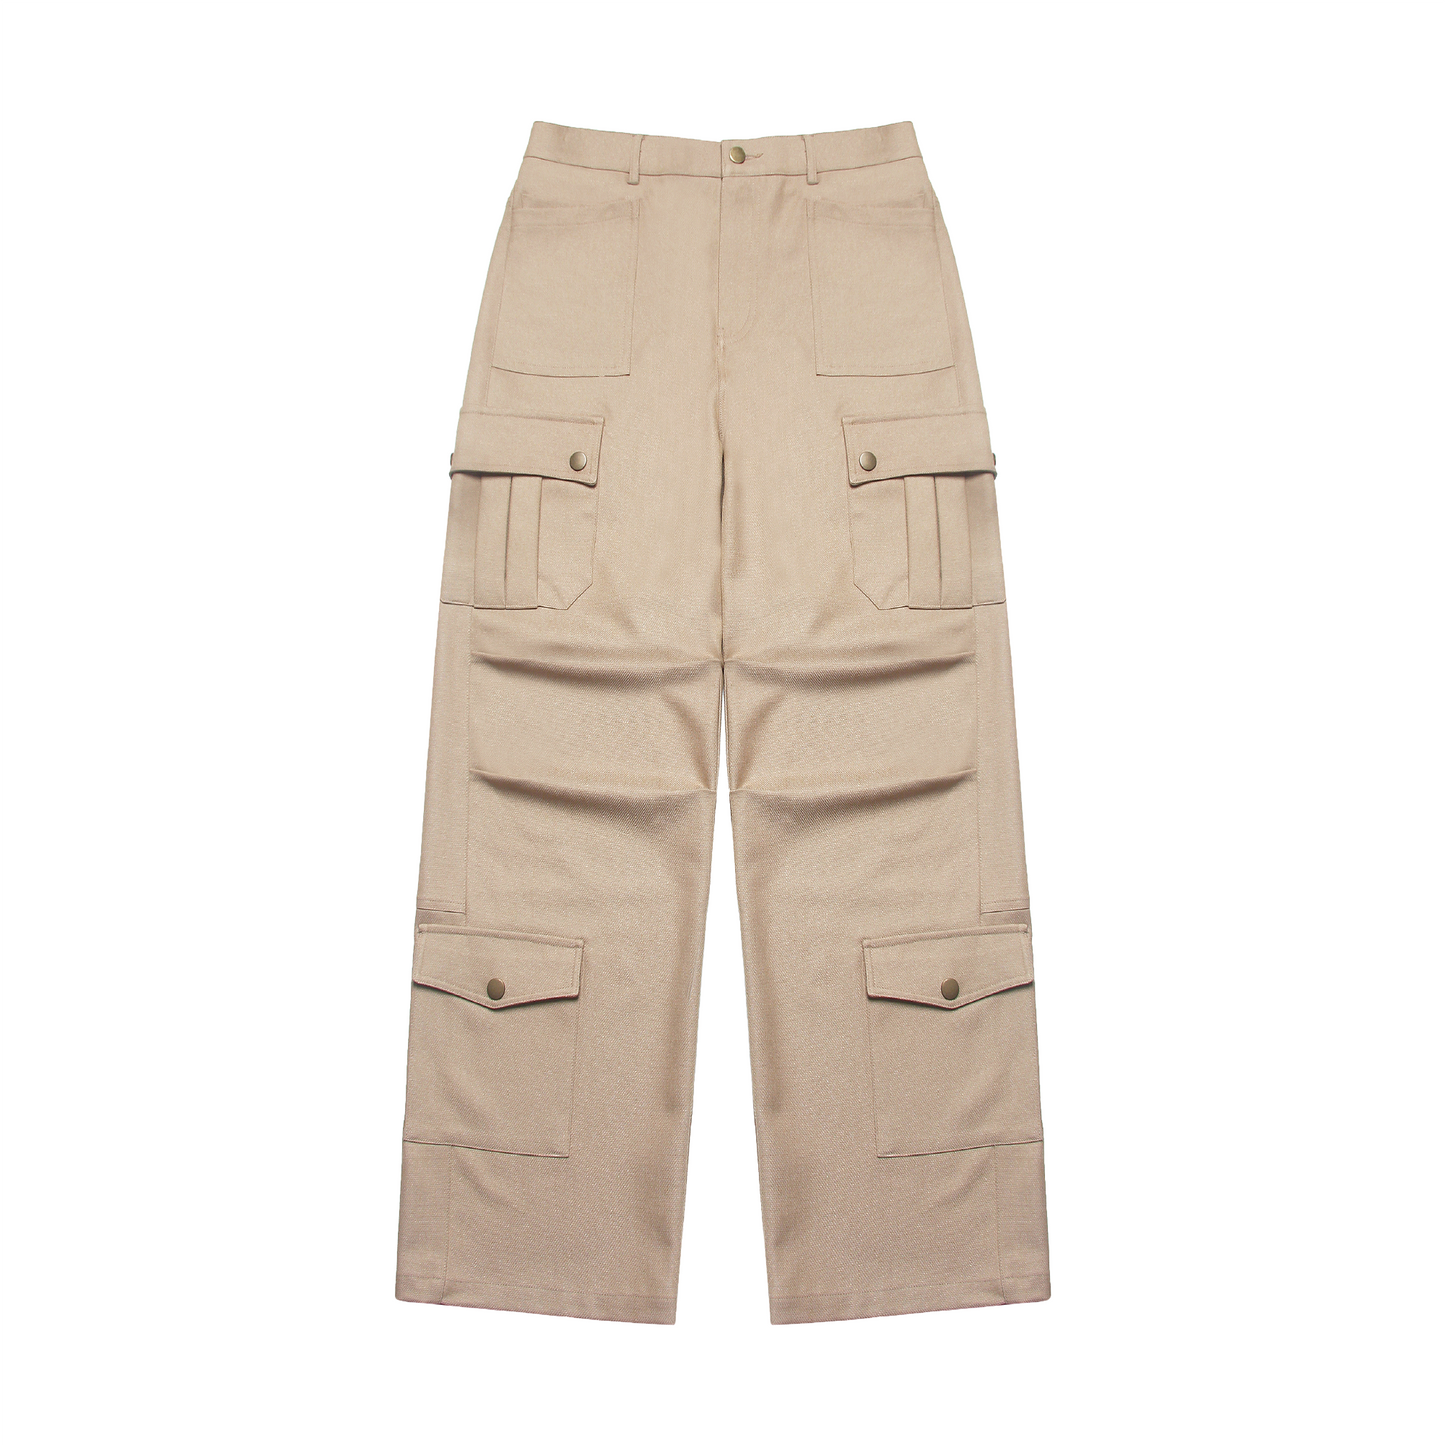 NCS® Utility Cargo Pants (Tan)